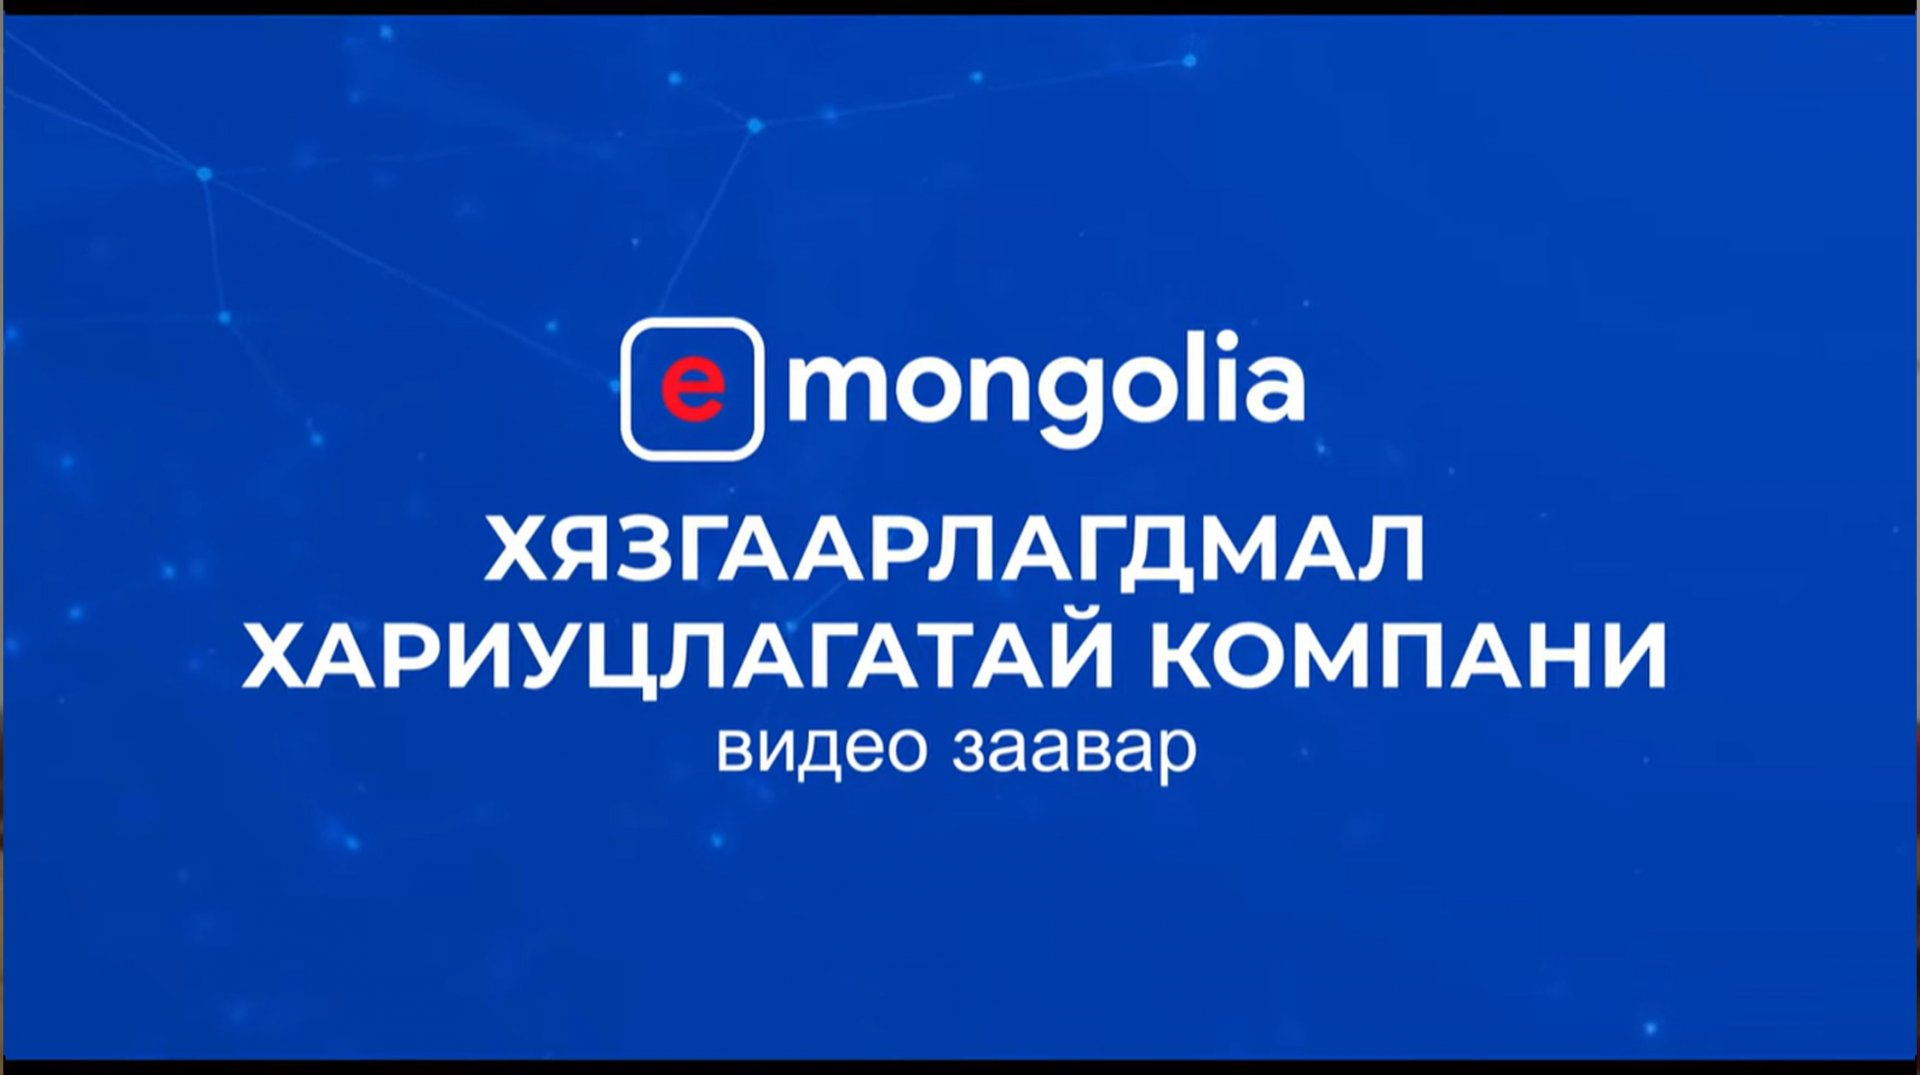 Хязгаарлагдмал хариуцлагатай компани - E mongolia /Видео заавар/